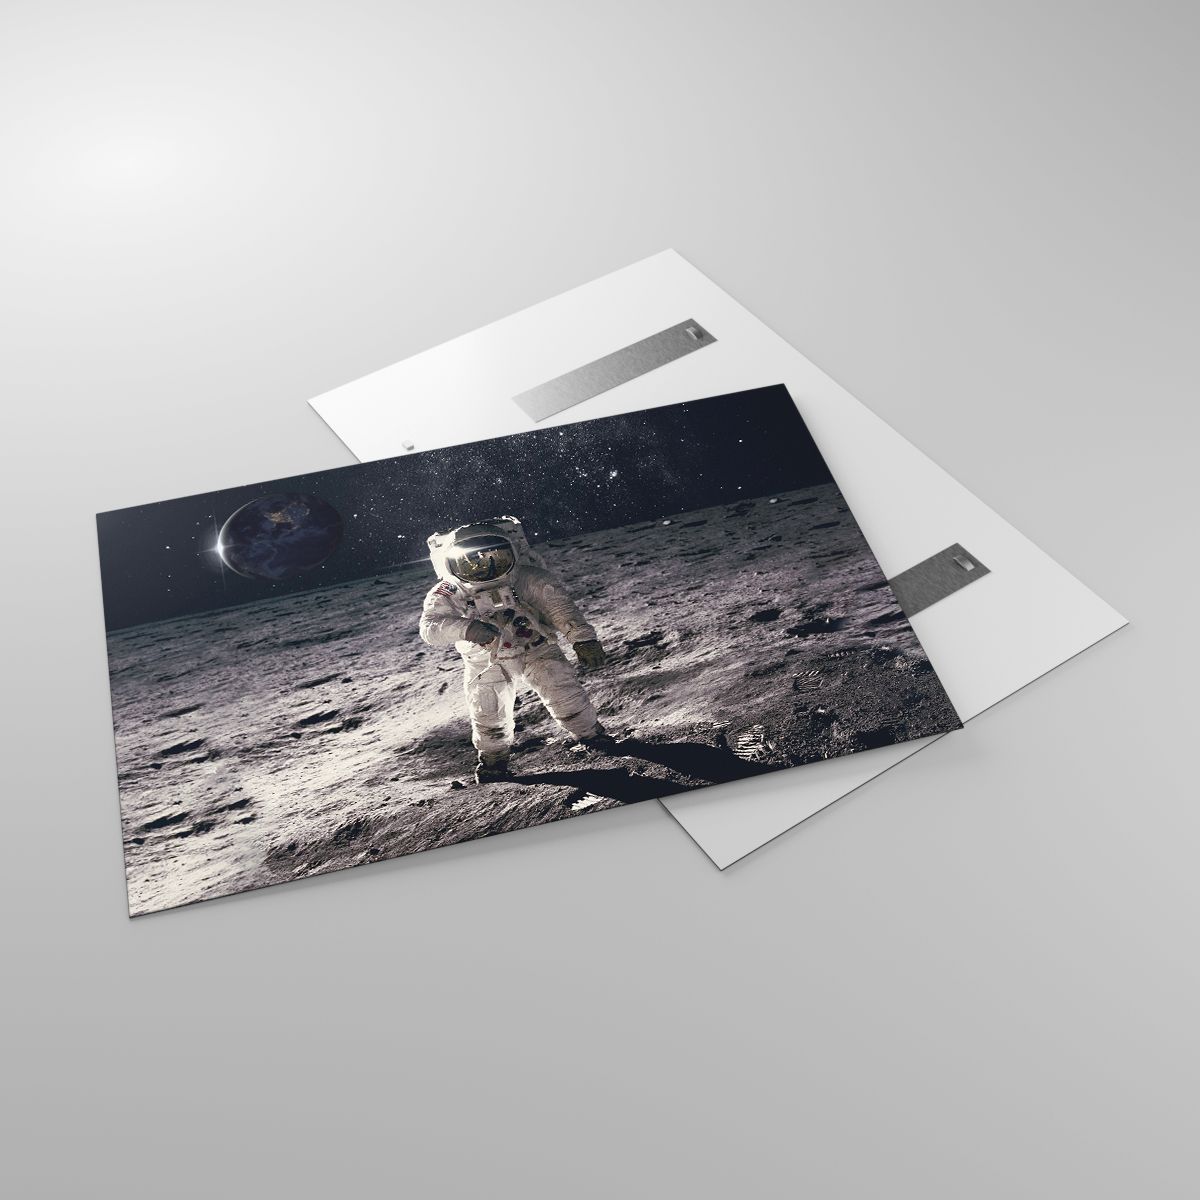 Obrazy Abstrakcja, Obrazy Człowiek Na Księżycu, Obrazy Astronauta, Obrazy Kosmos, Obrazy Księżyc